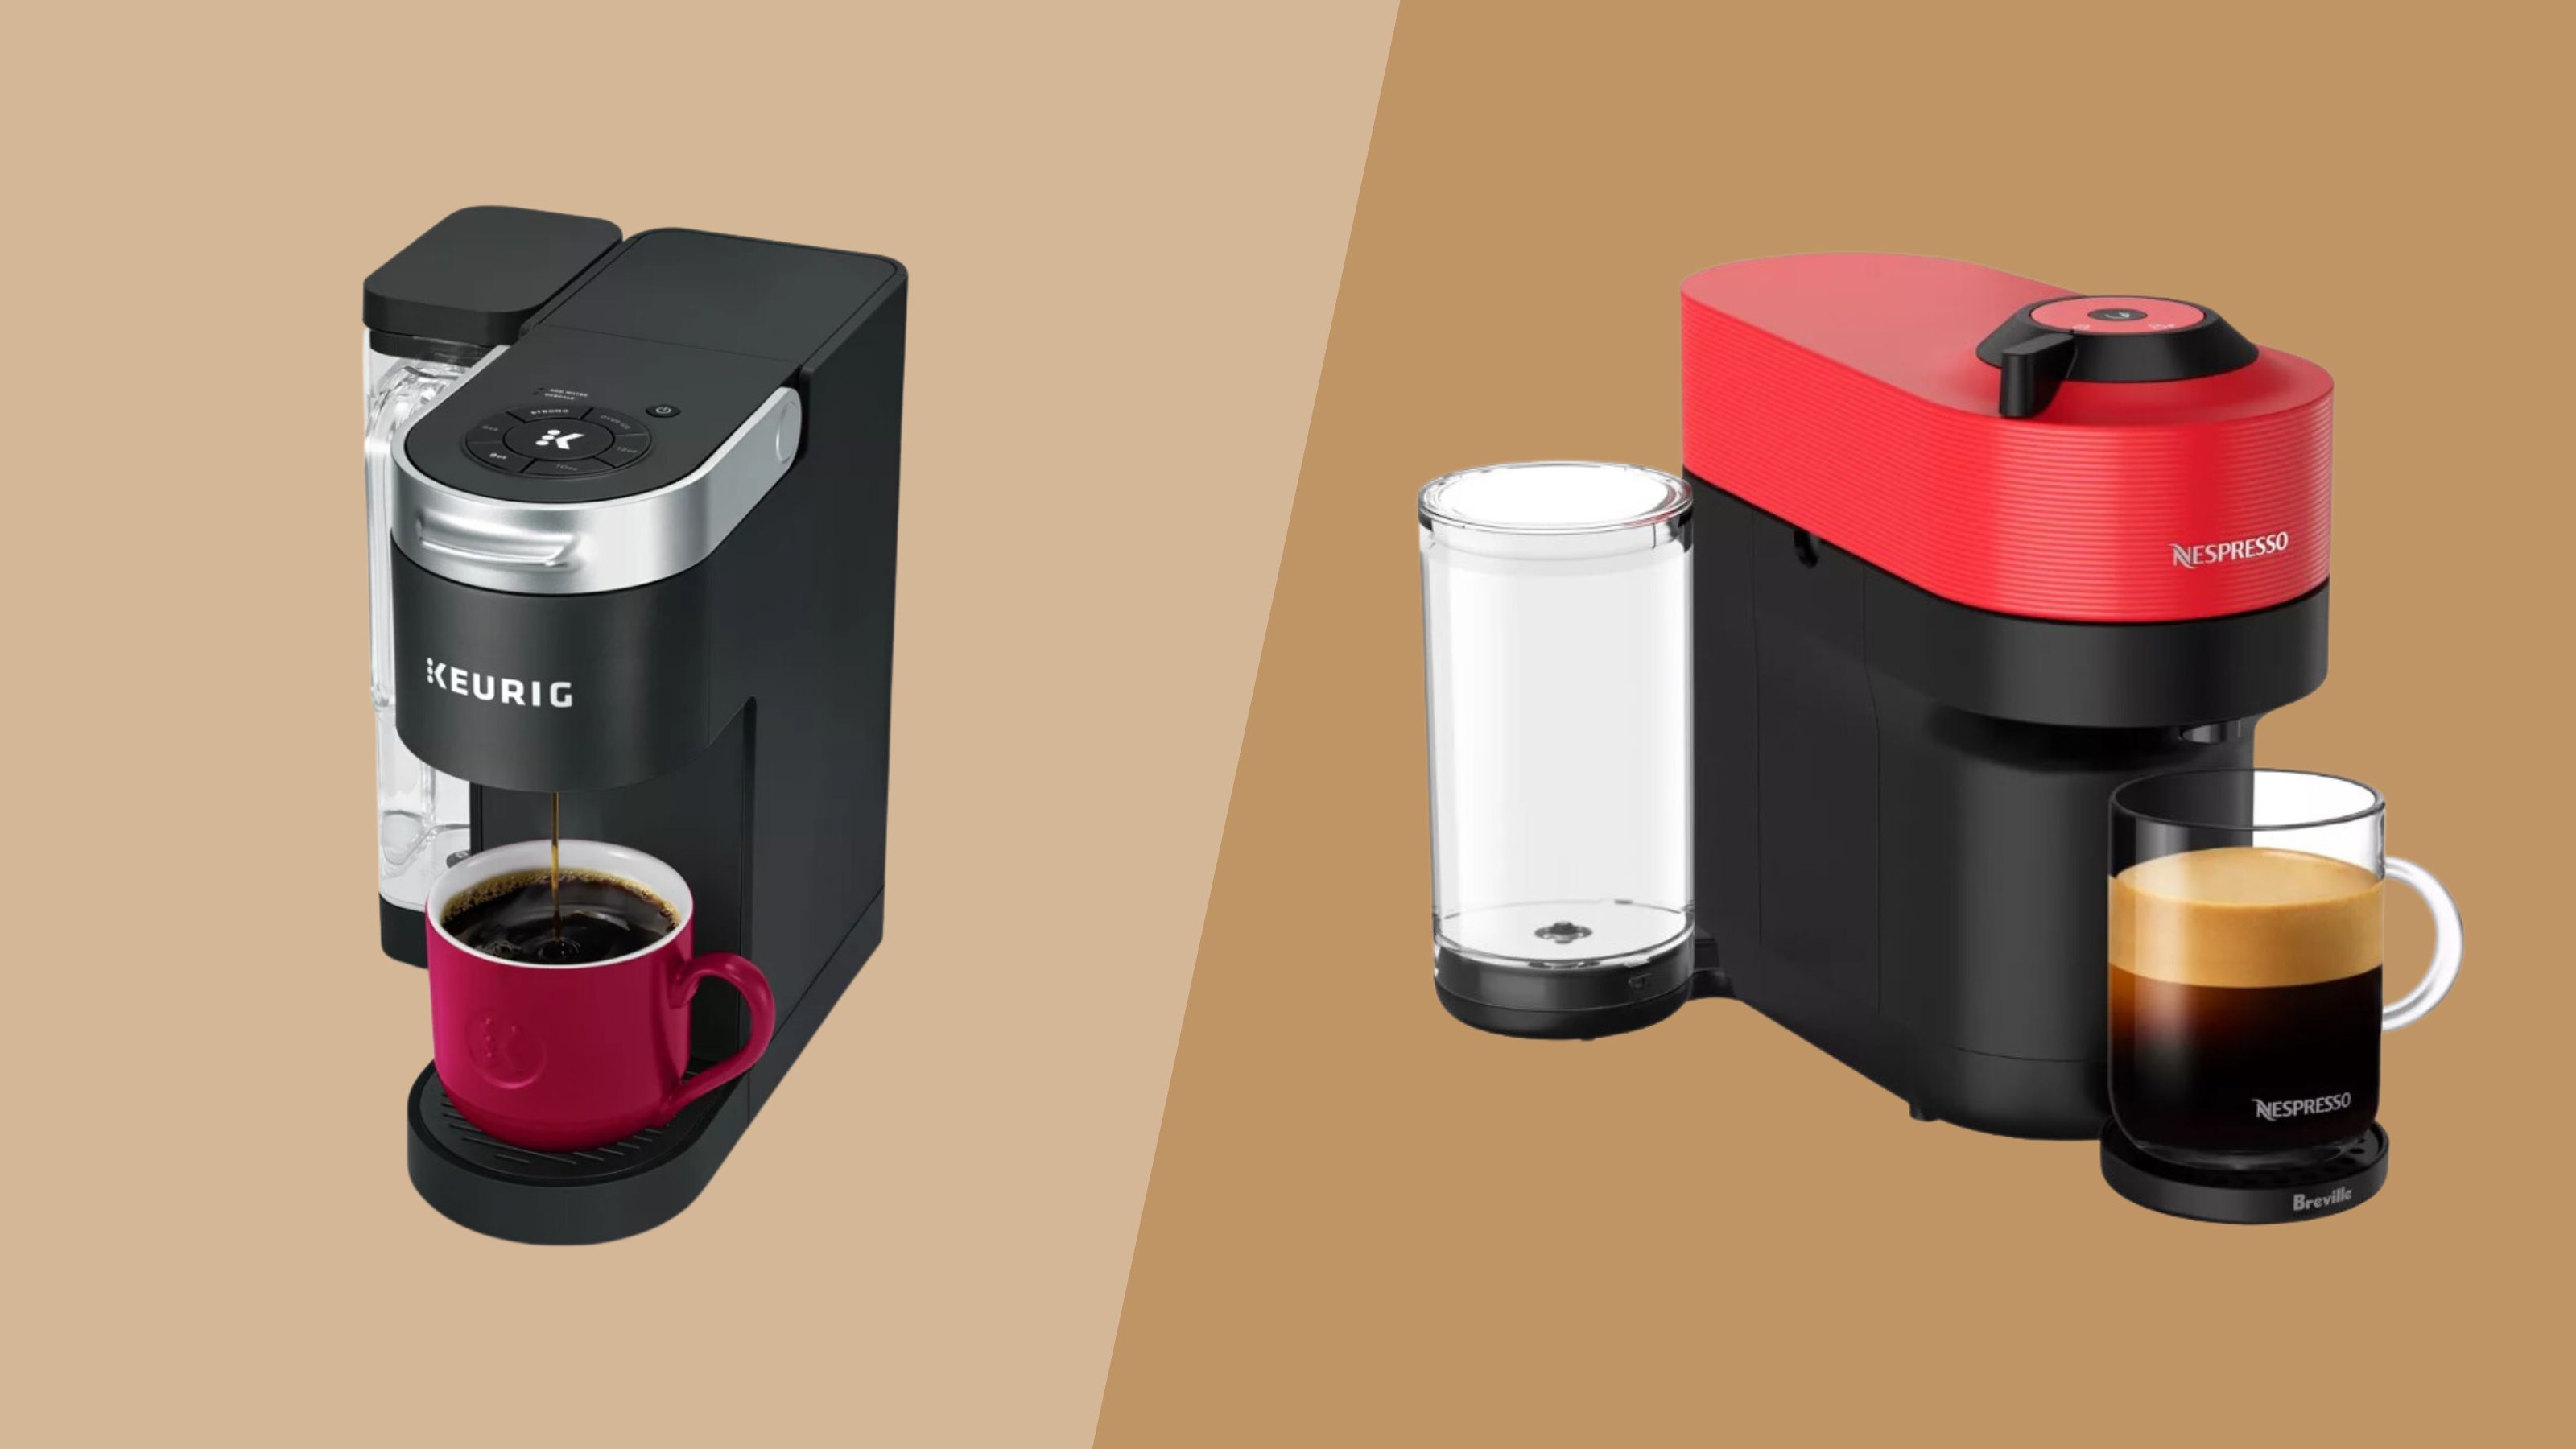 Keurig vs Nespresso: which coffee maker is best?